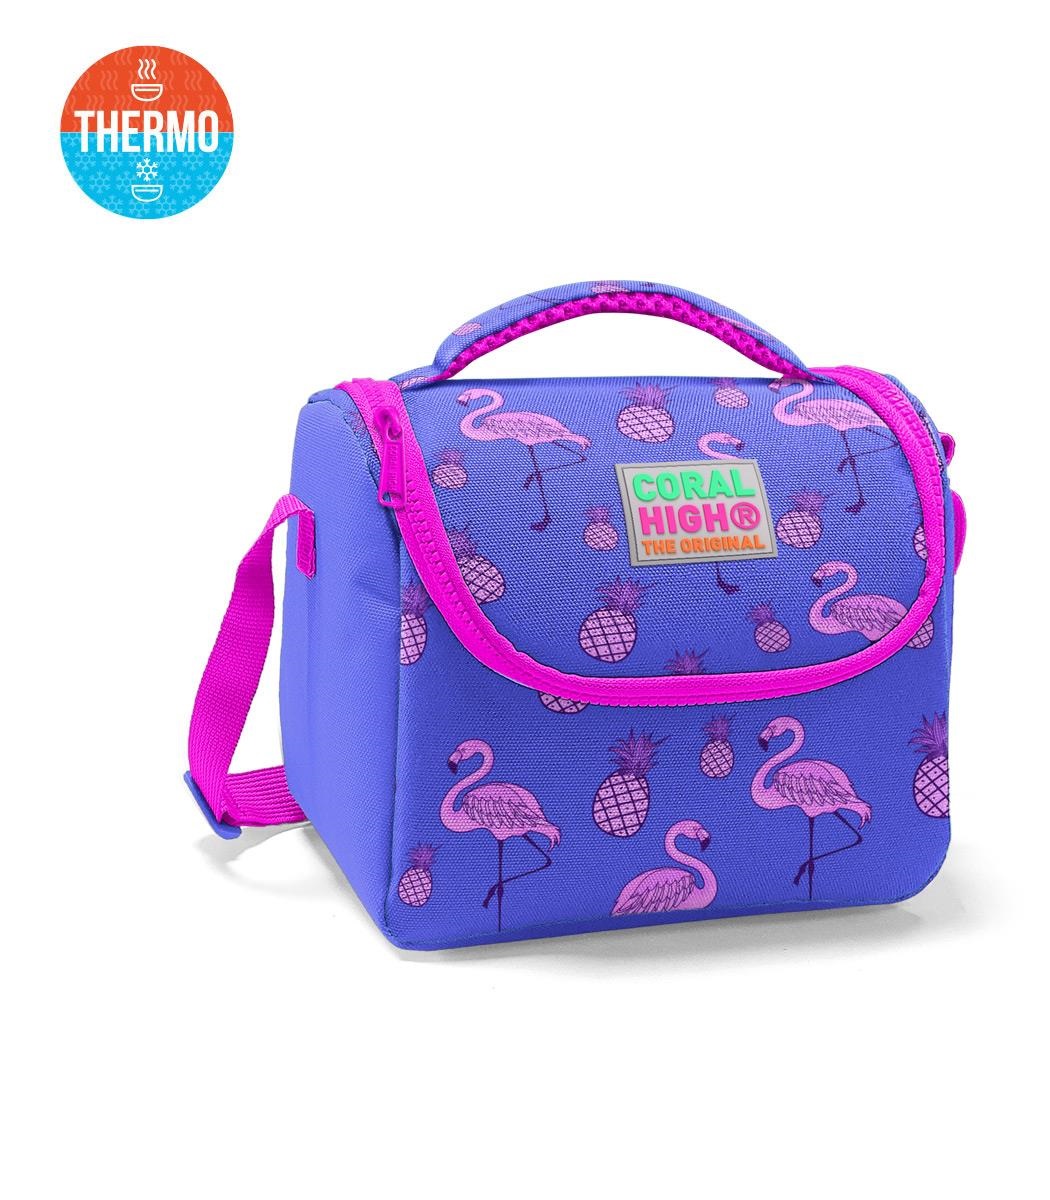 Coral High Kids Thermal Lunch Bag - Pink Lavender Flamingo Patterned